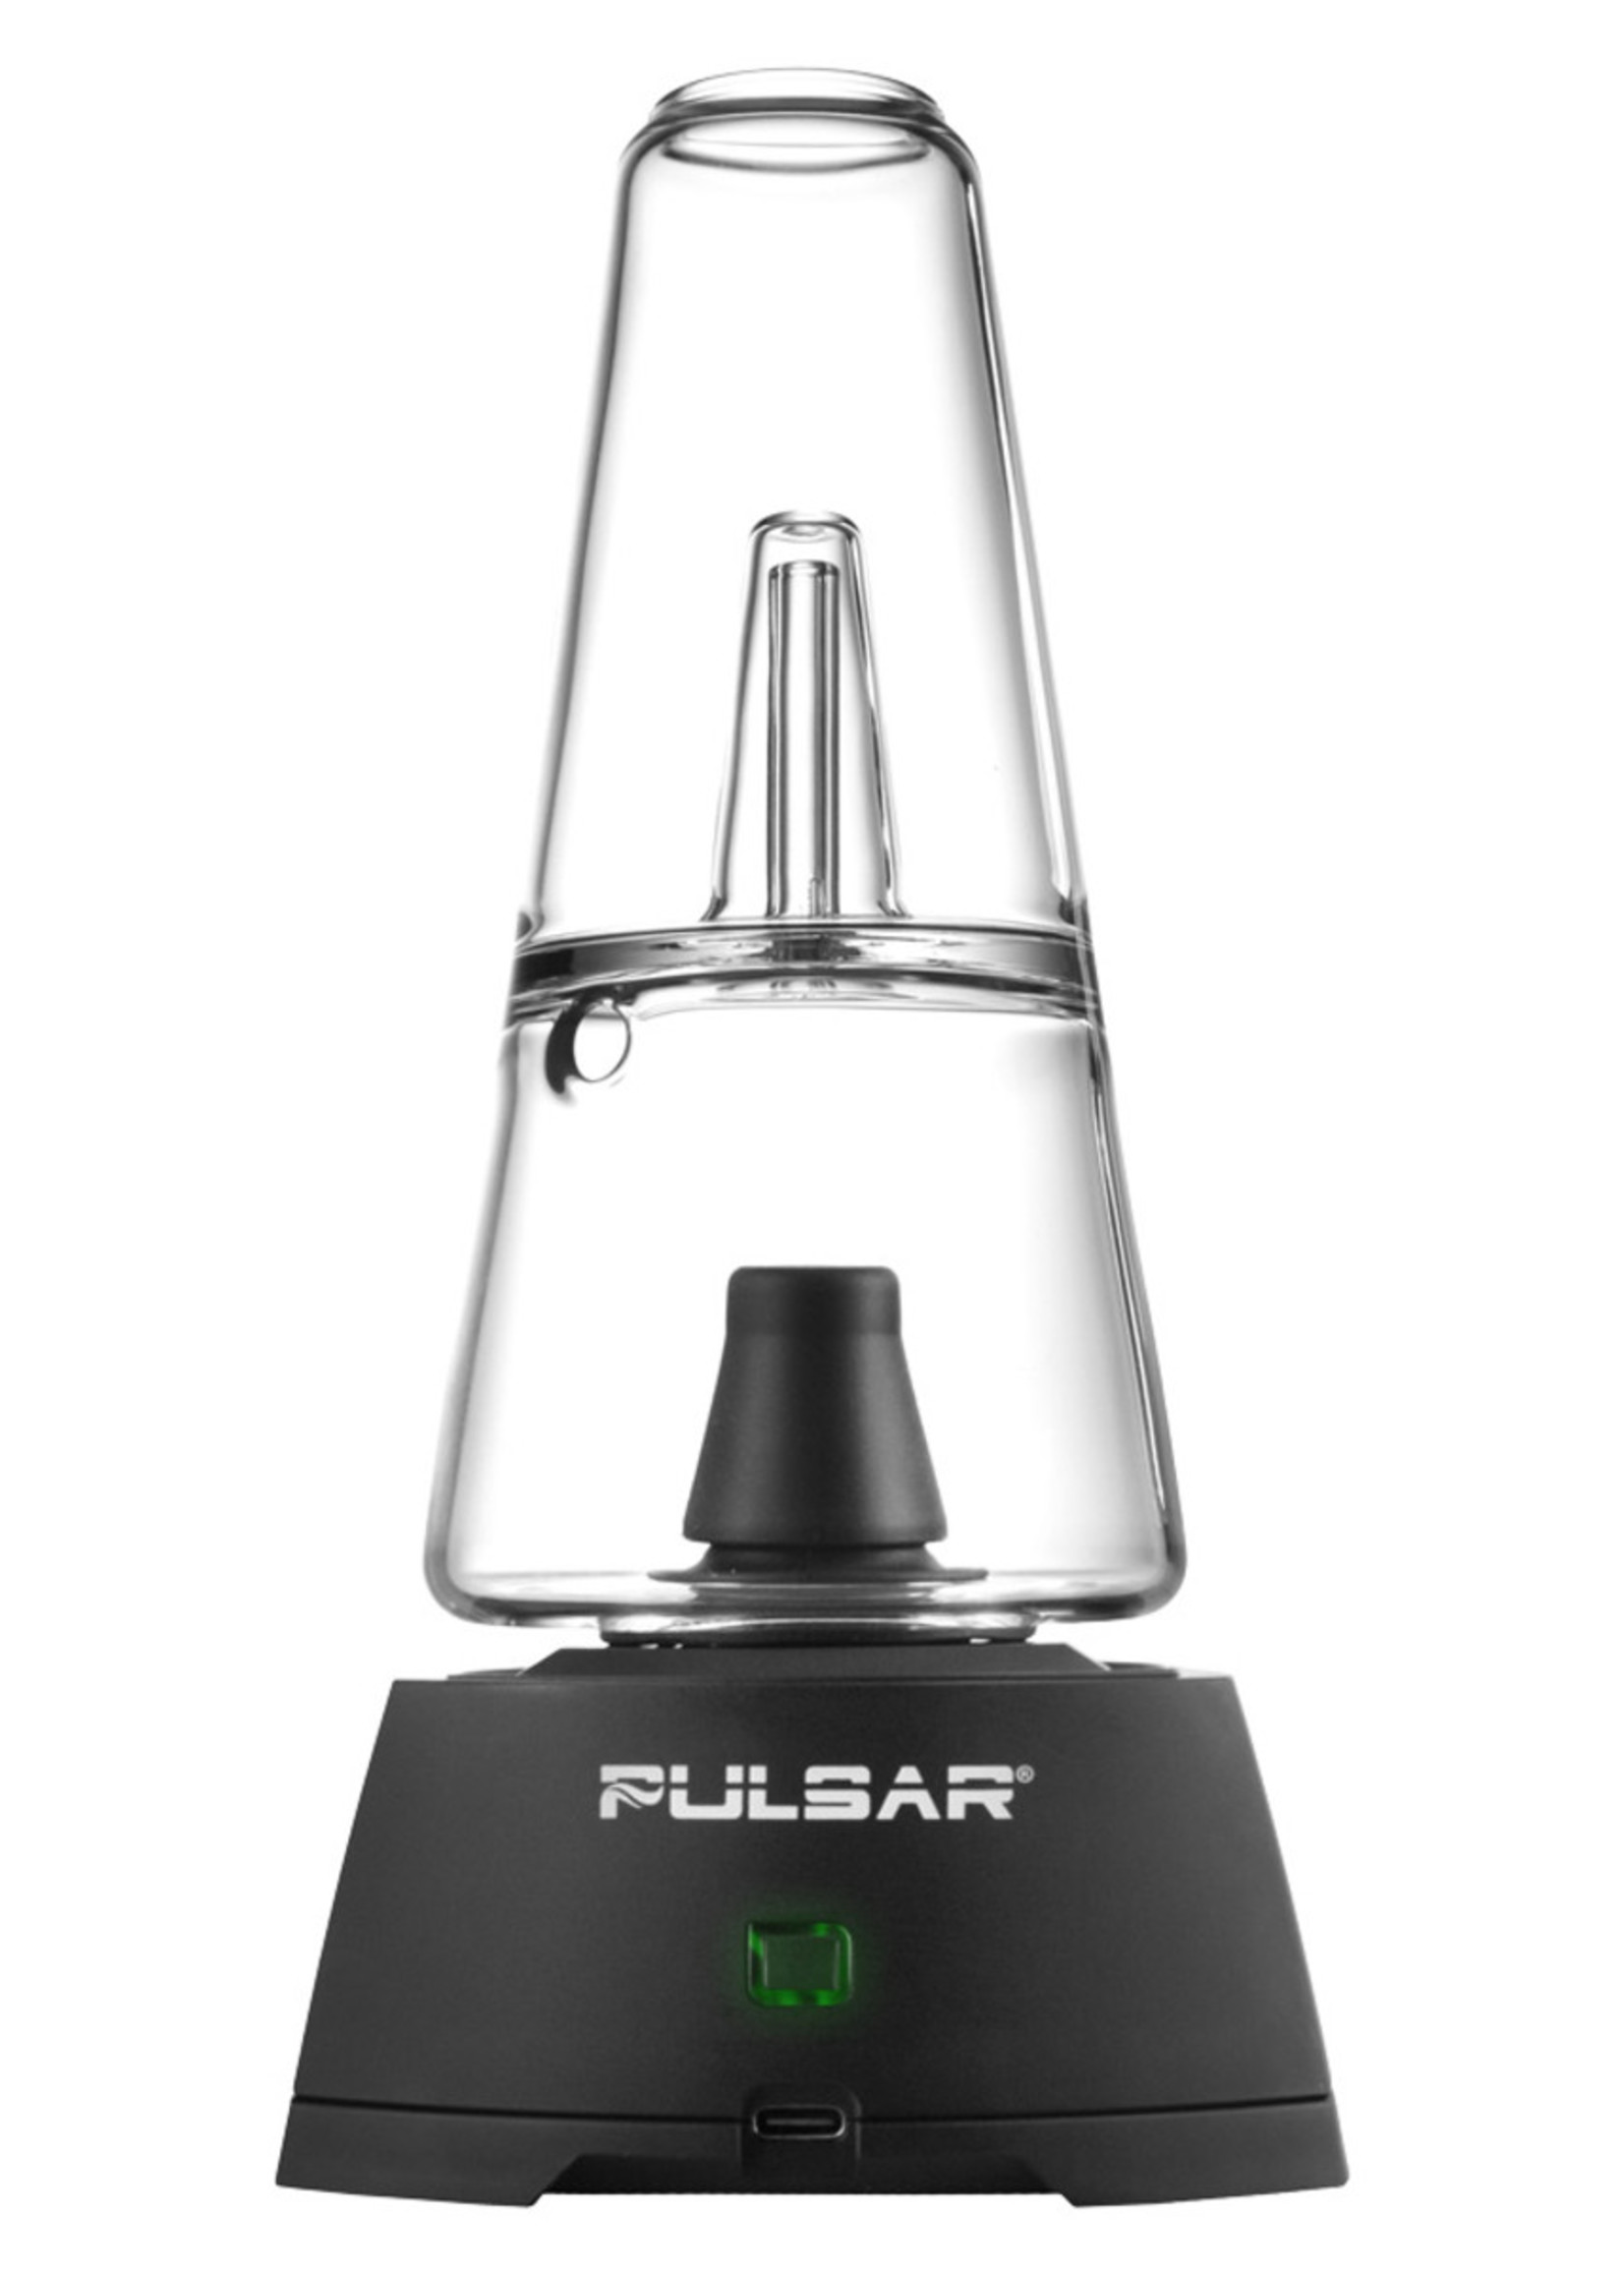 Pulsar Sipper Dual Use Concentrate or 510 Cartridge Vaporizer | 1500mAh - #2035